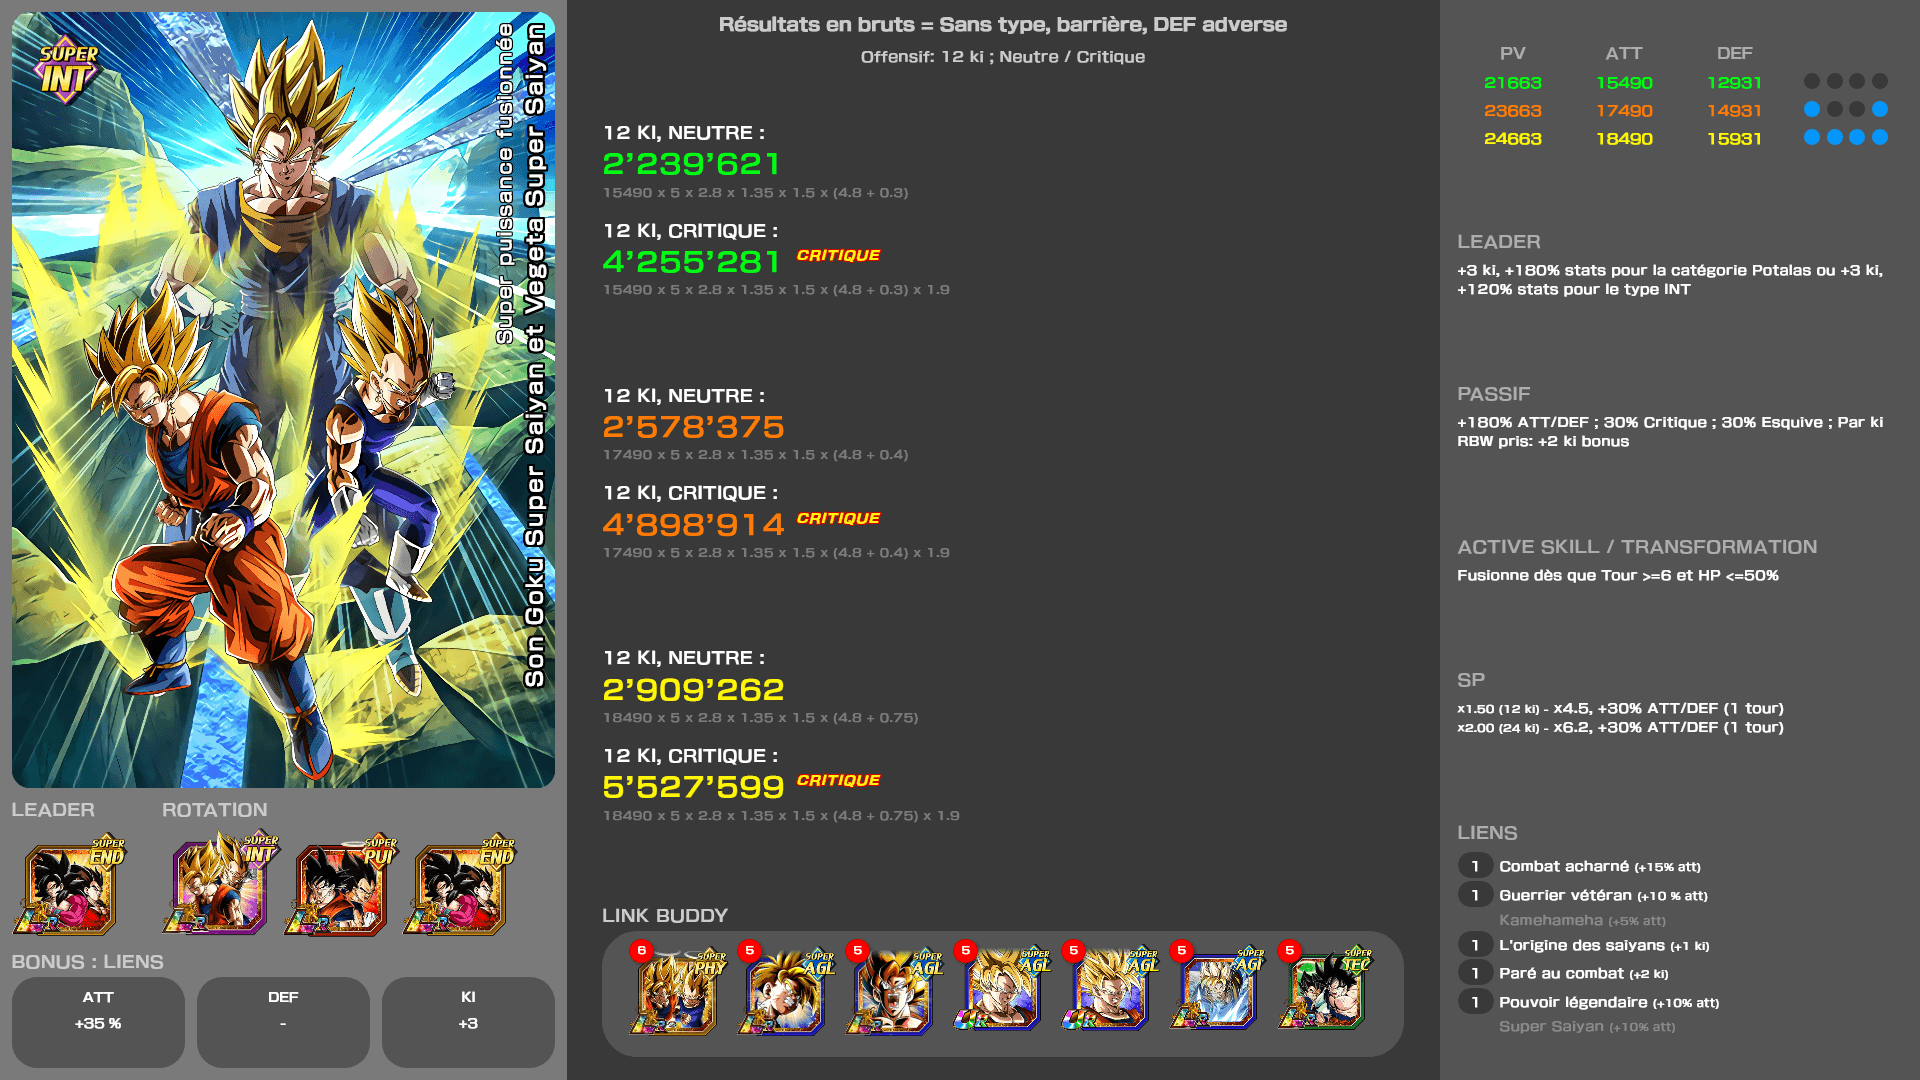 Fiche n°2 Son Goku Super Saiyan et Vegeta Super SaiyanSuper puissance fusionnée